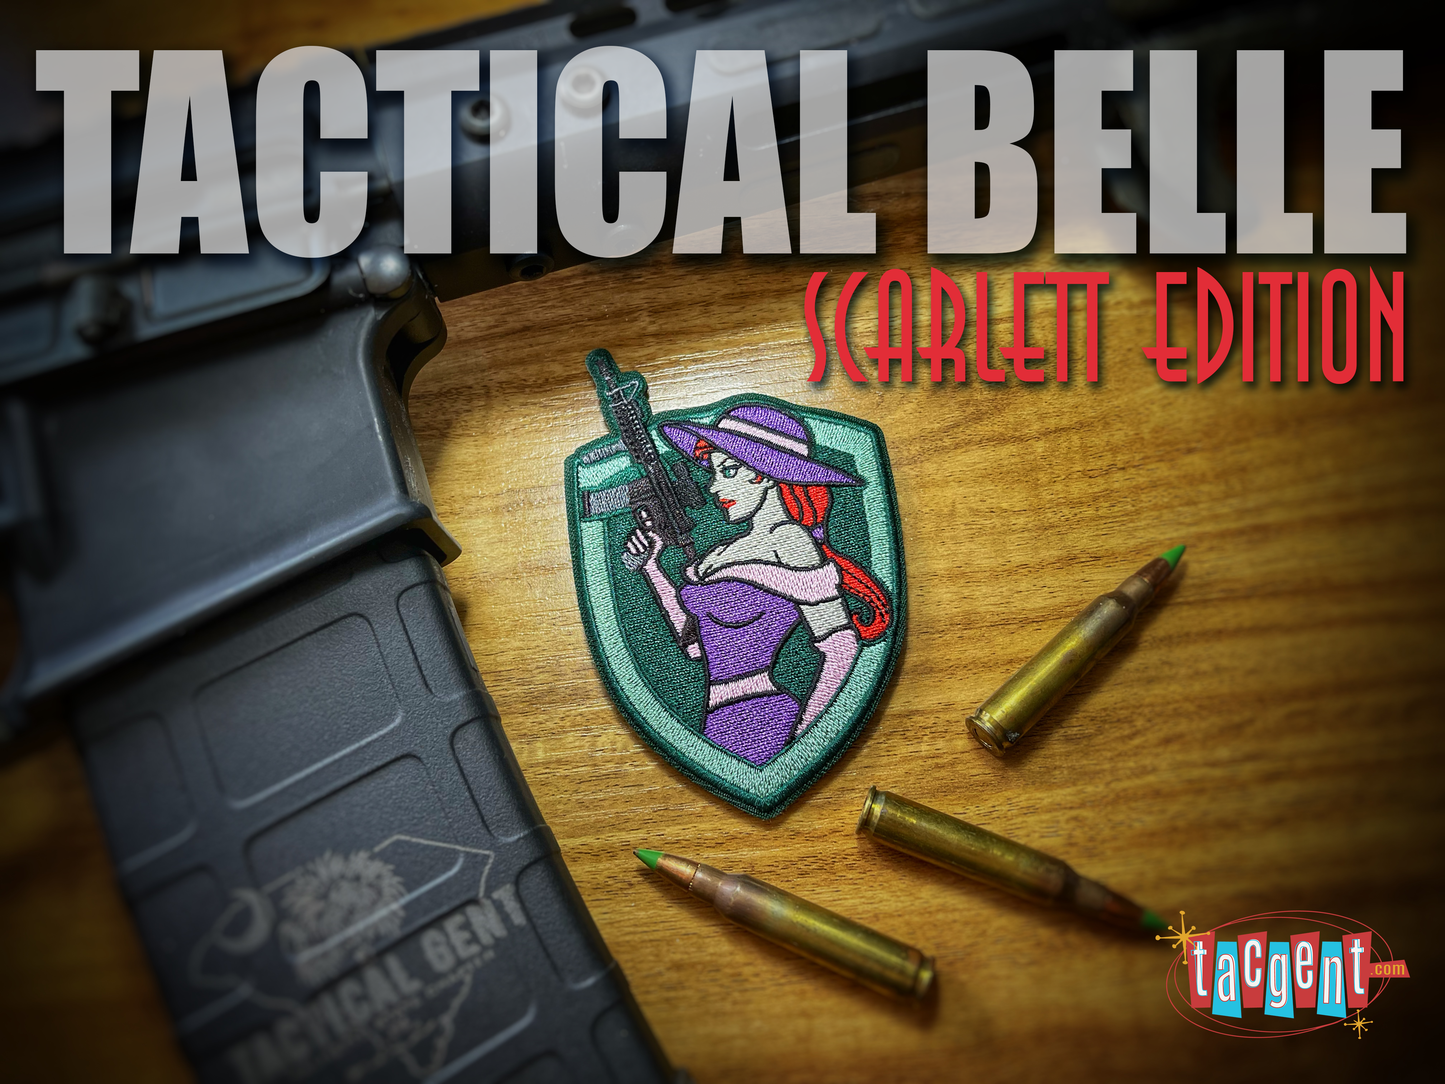 Tactical Belle: Scarlett Edition